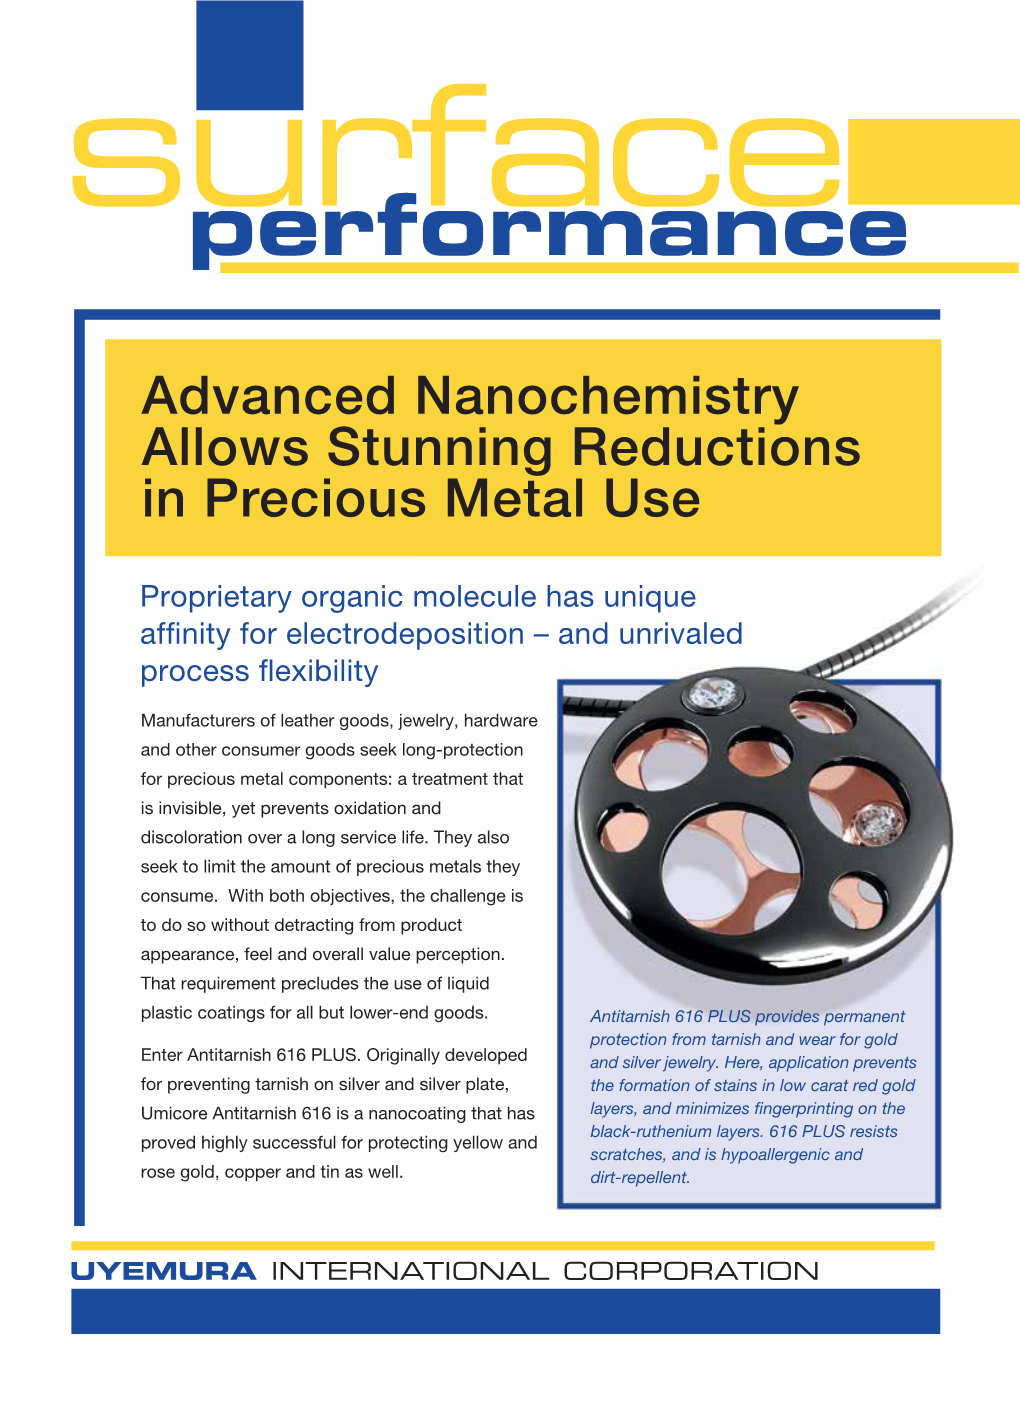 New Nanochemistry Reduces Precious Metal Use, Electrolytic